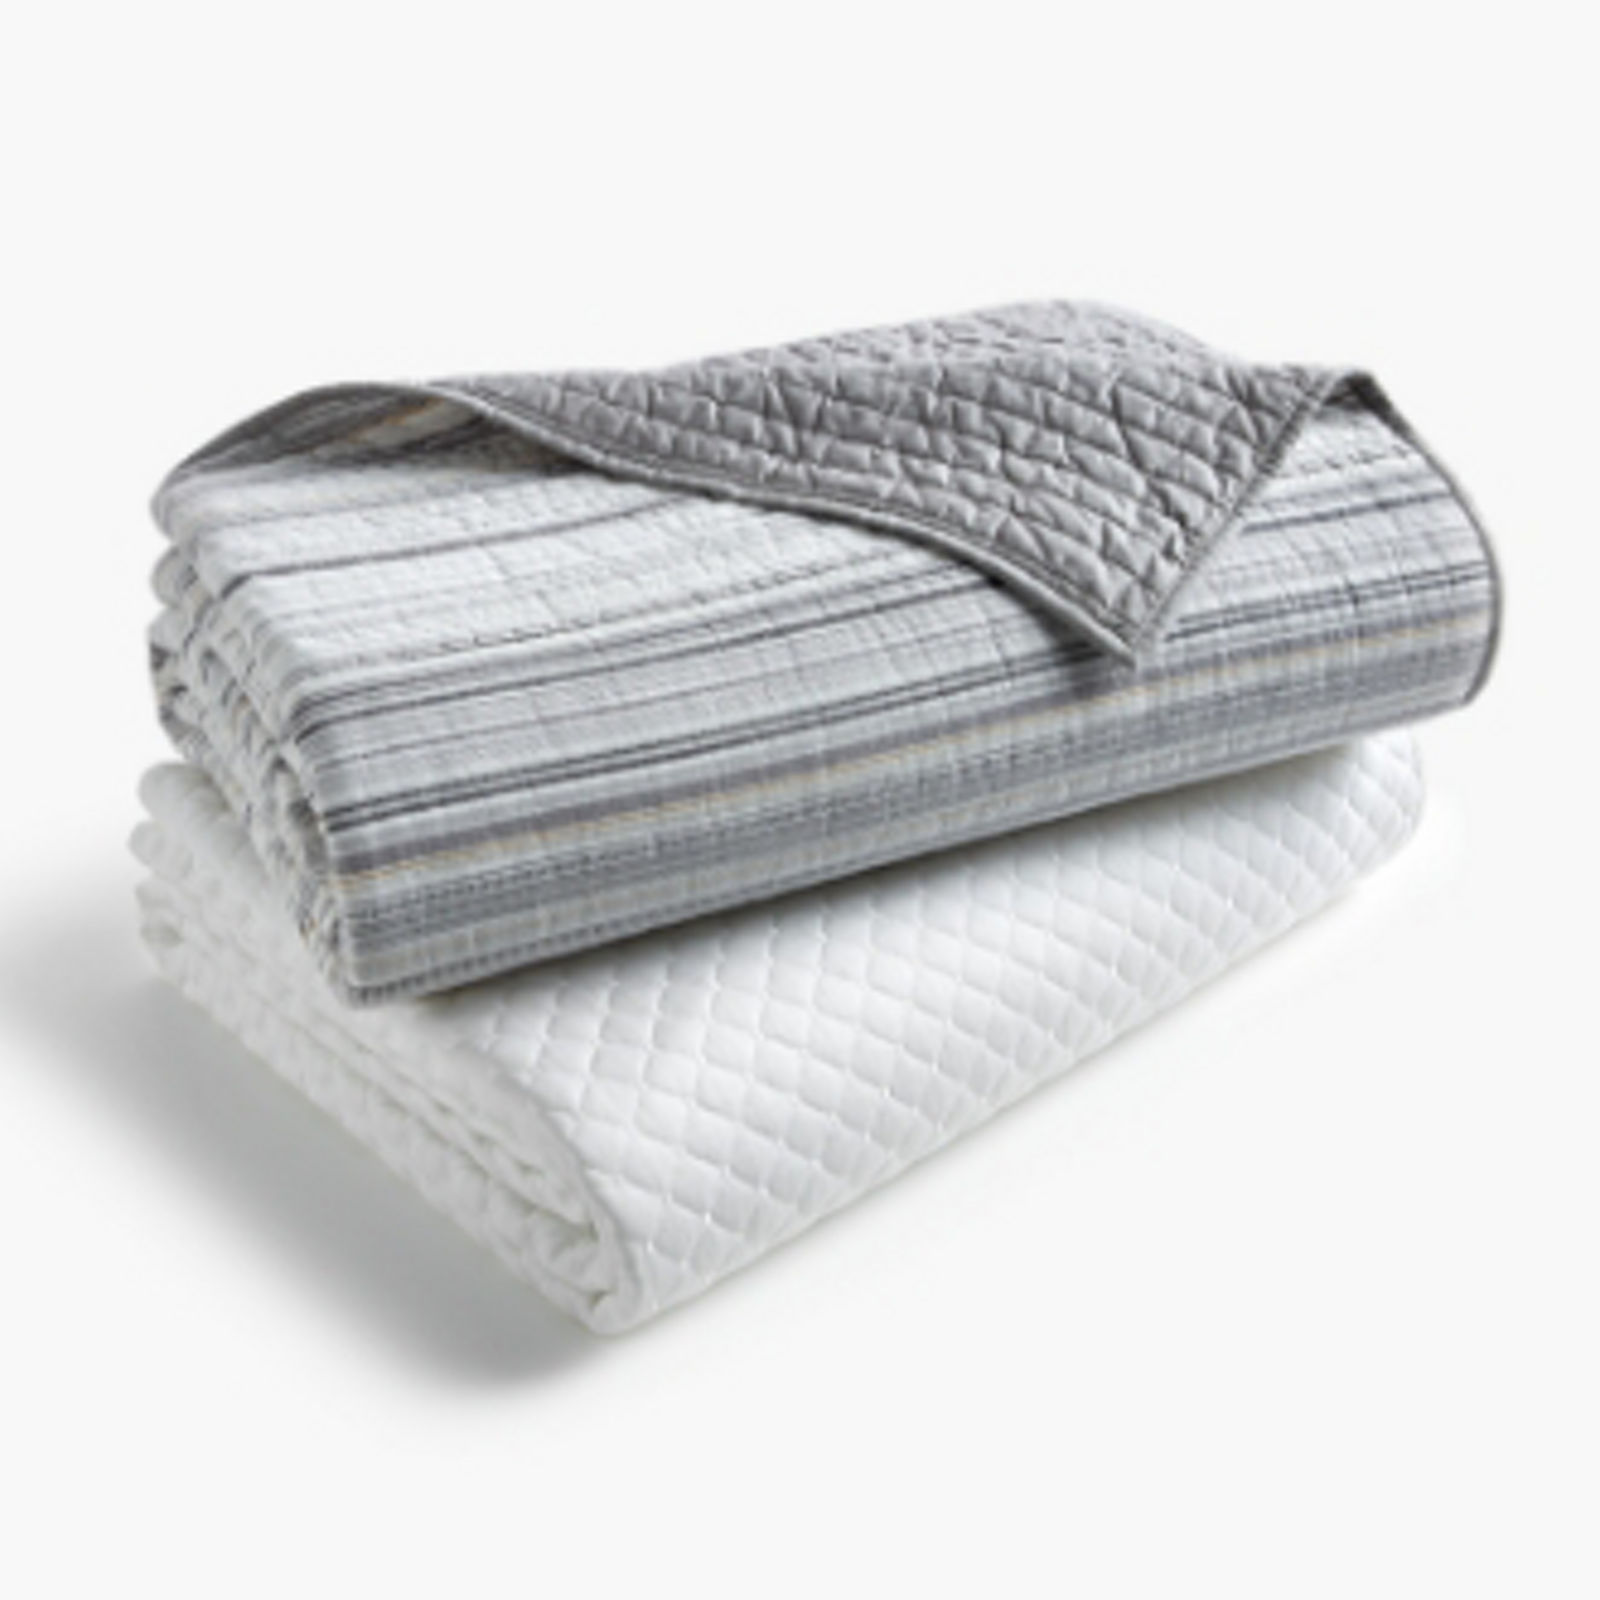 Bedding, Towels & Bath Accessories - Macy's